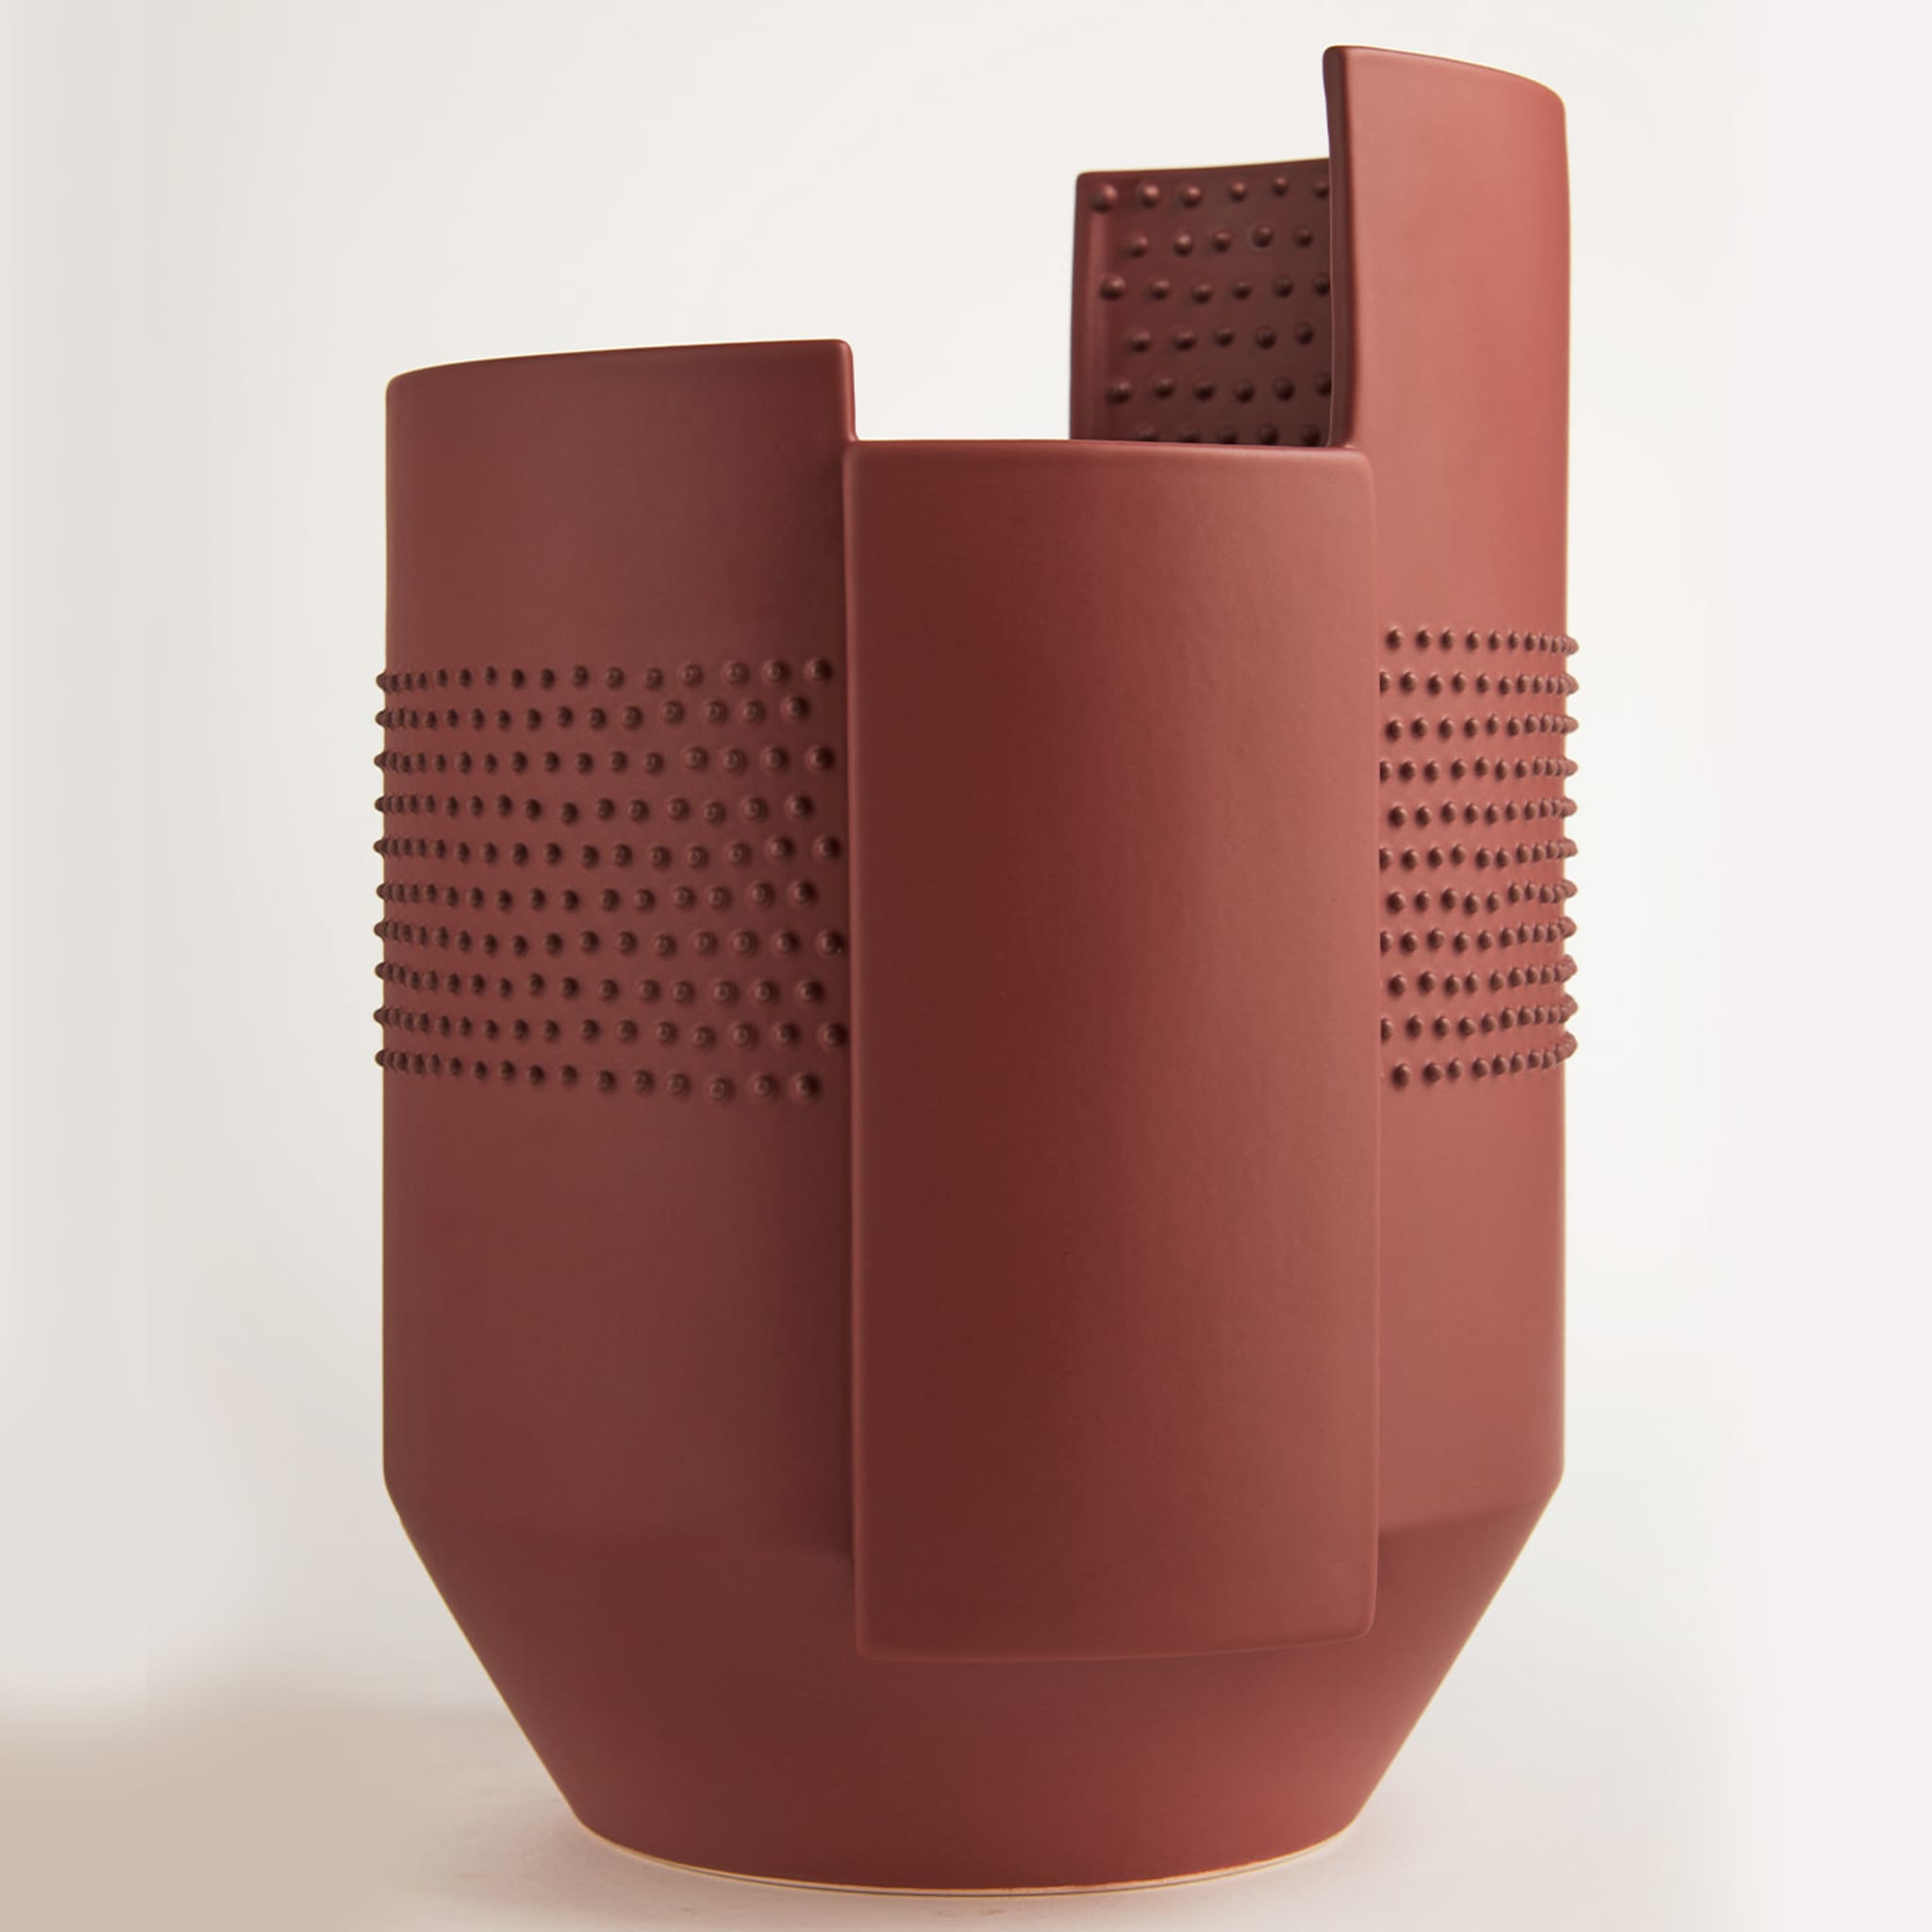 Hugo Burgundy Vase by Simona Cardinetti - Alternative view 2